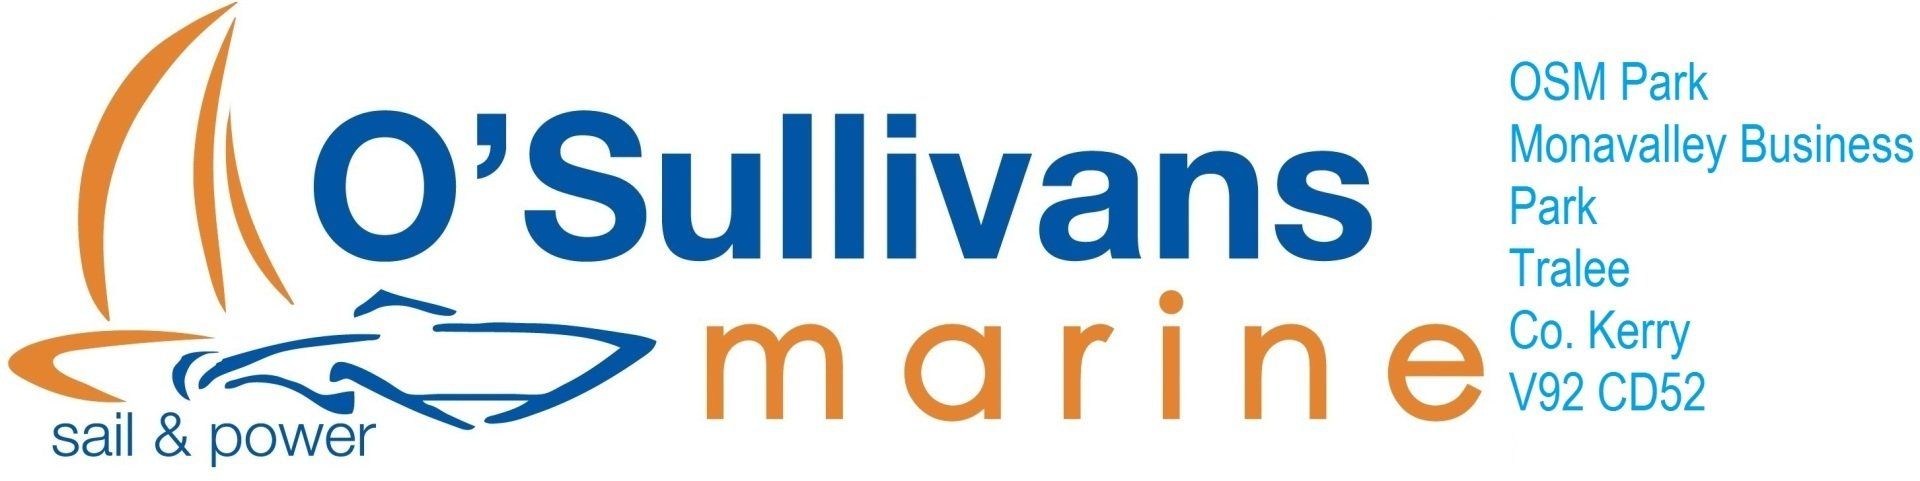 O'Sullivans marine Ireland